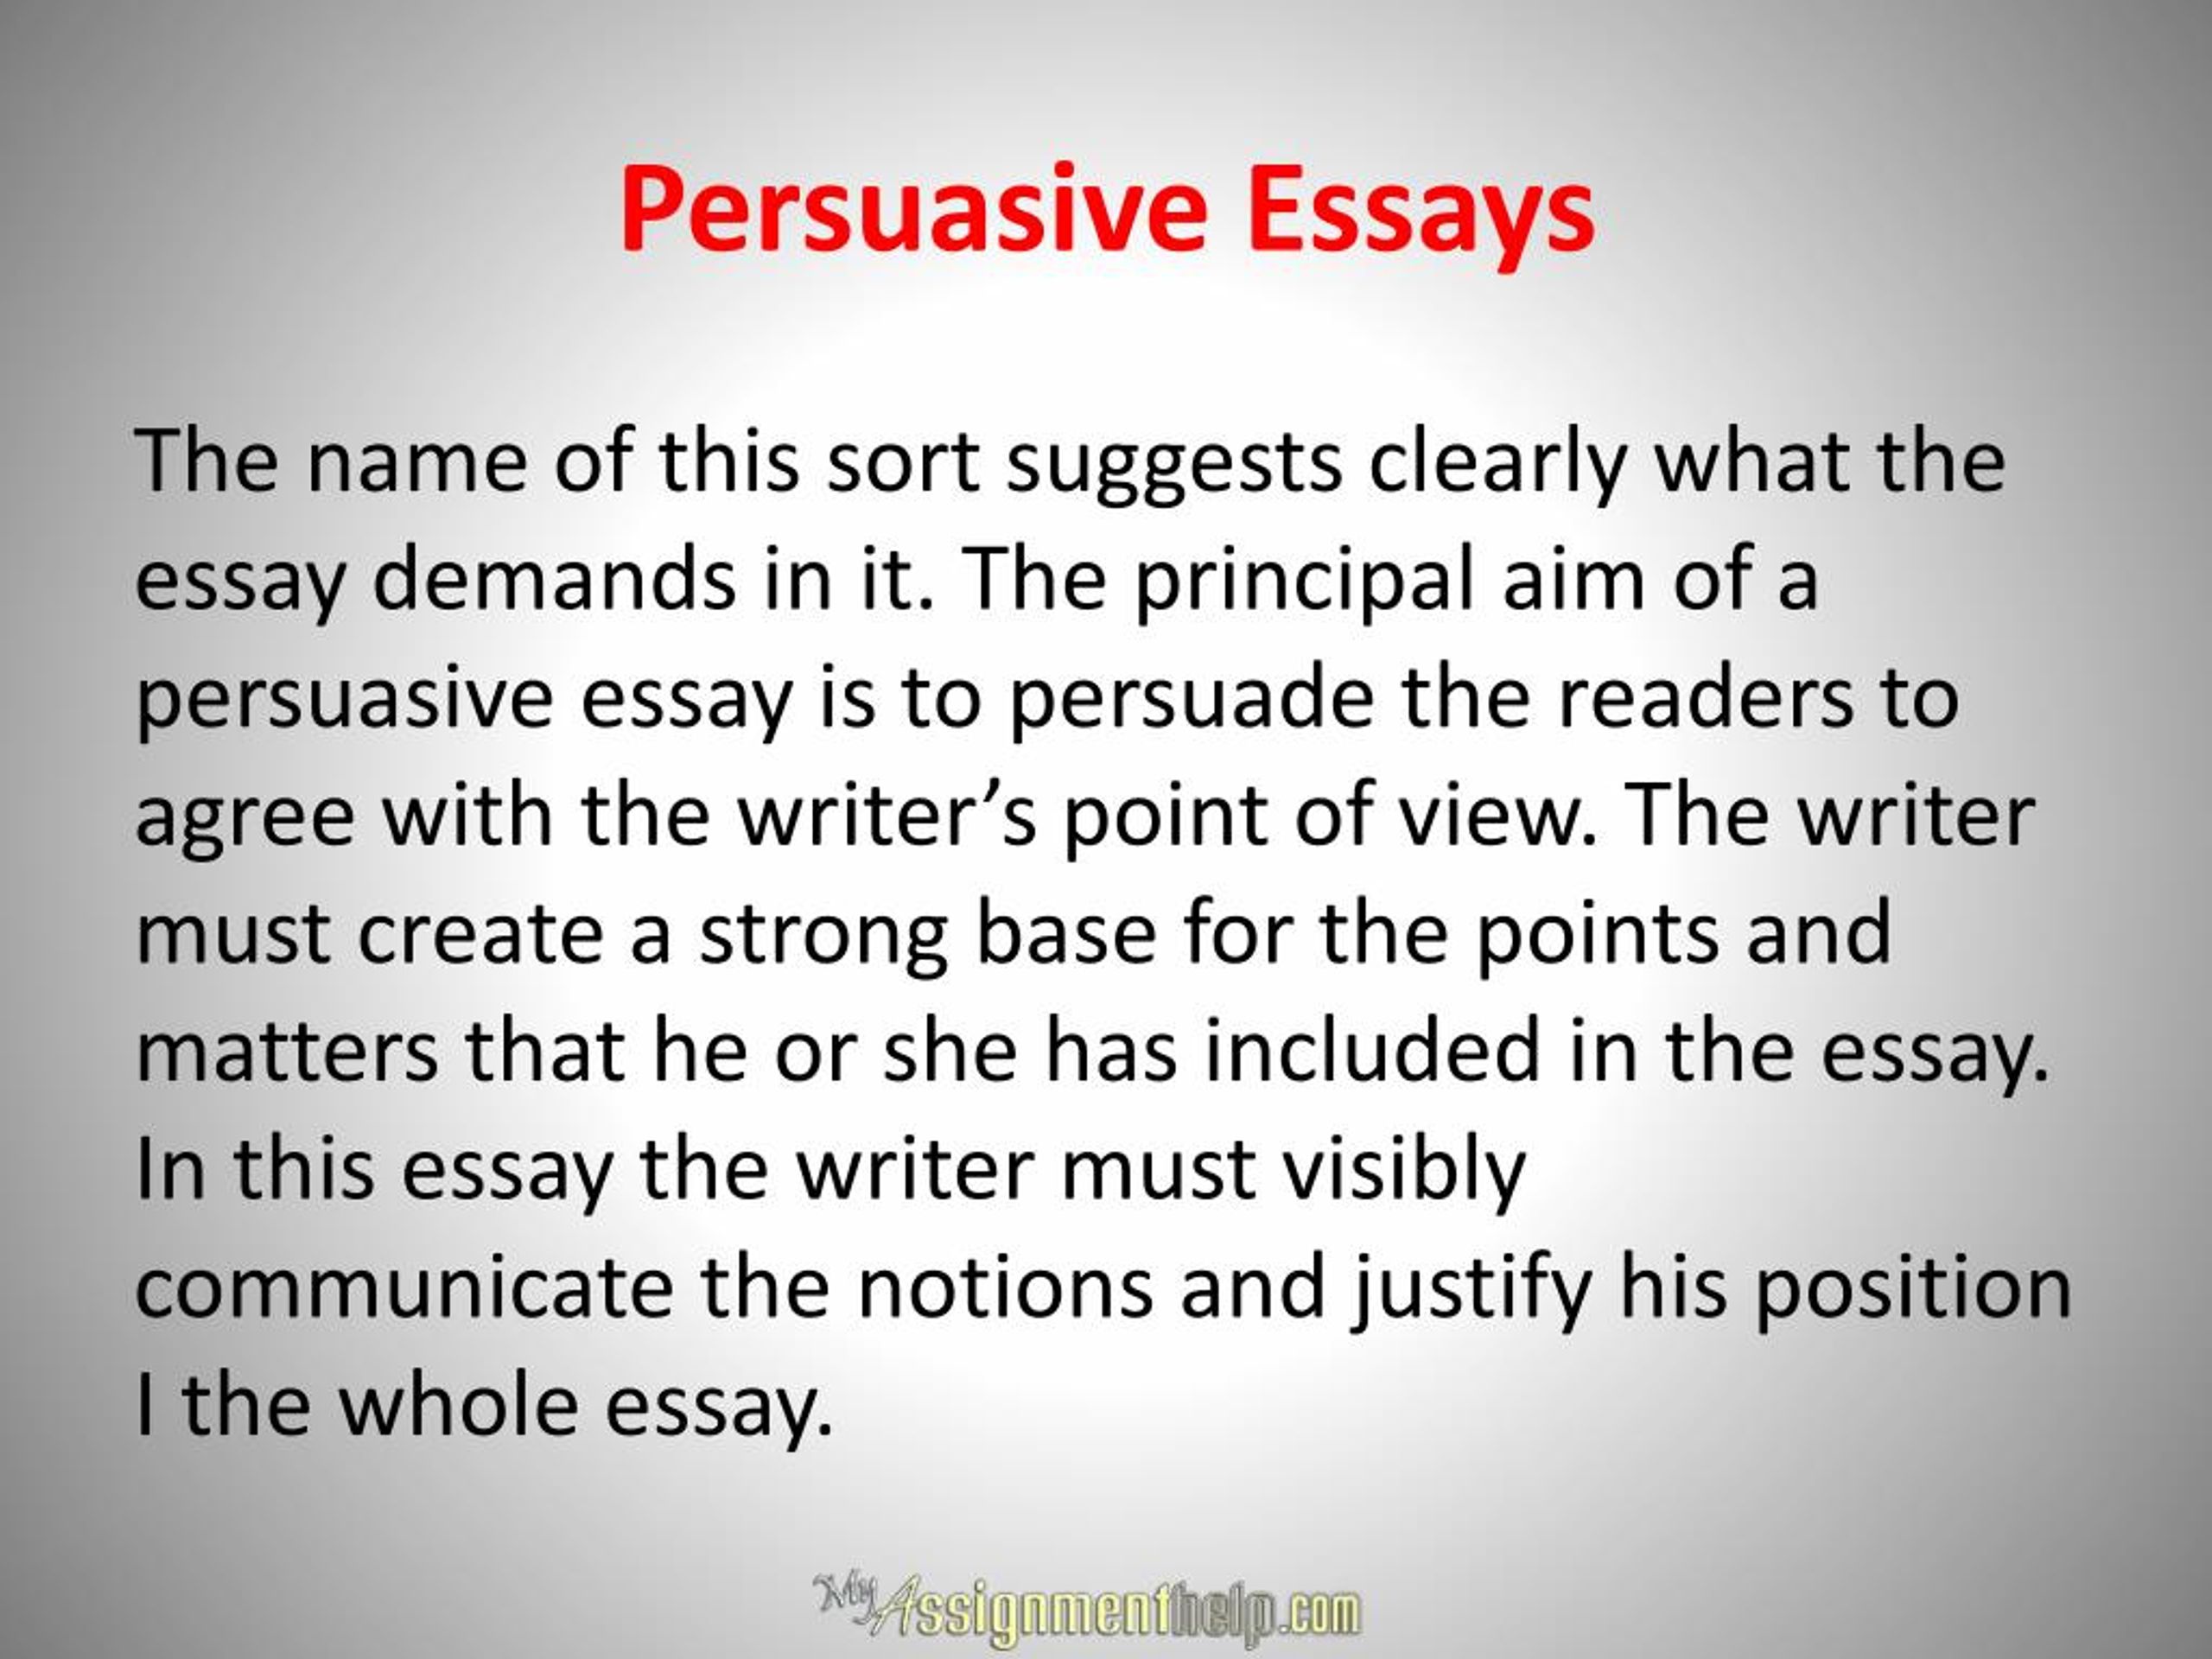 Types of persuasive essay